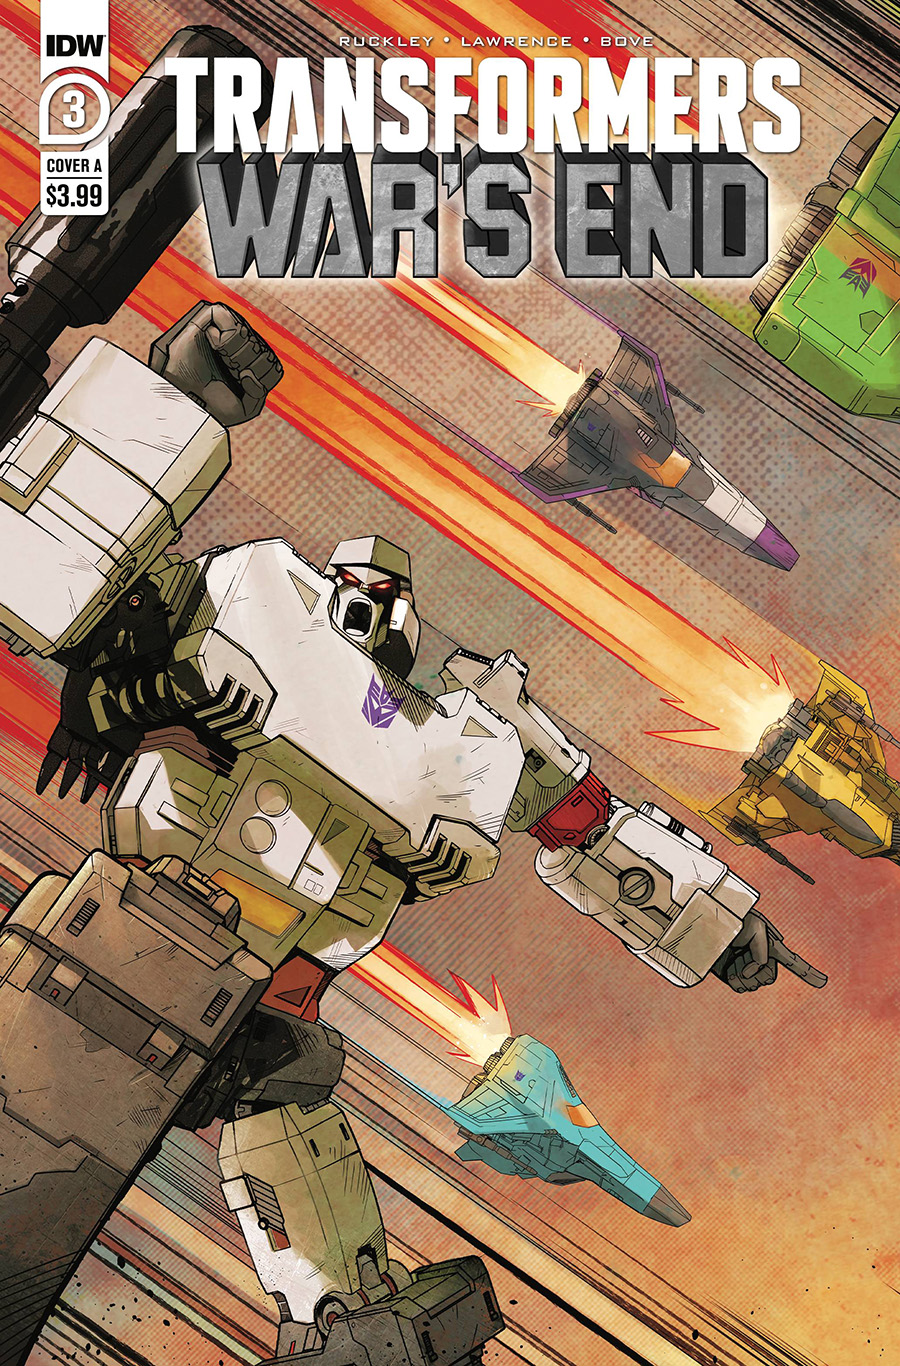 Transformers Wars End #3 Cover A Regular Sebastian Piriz Cover